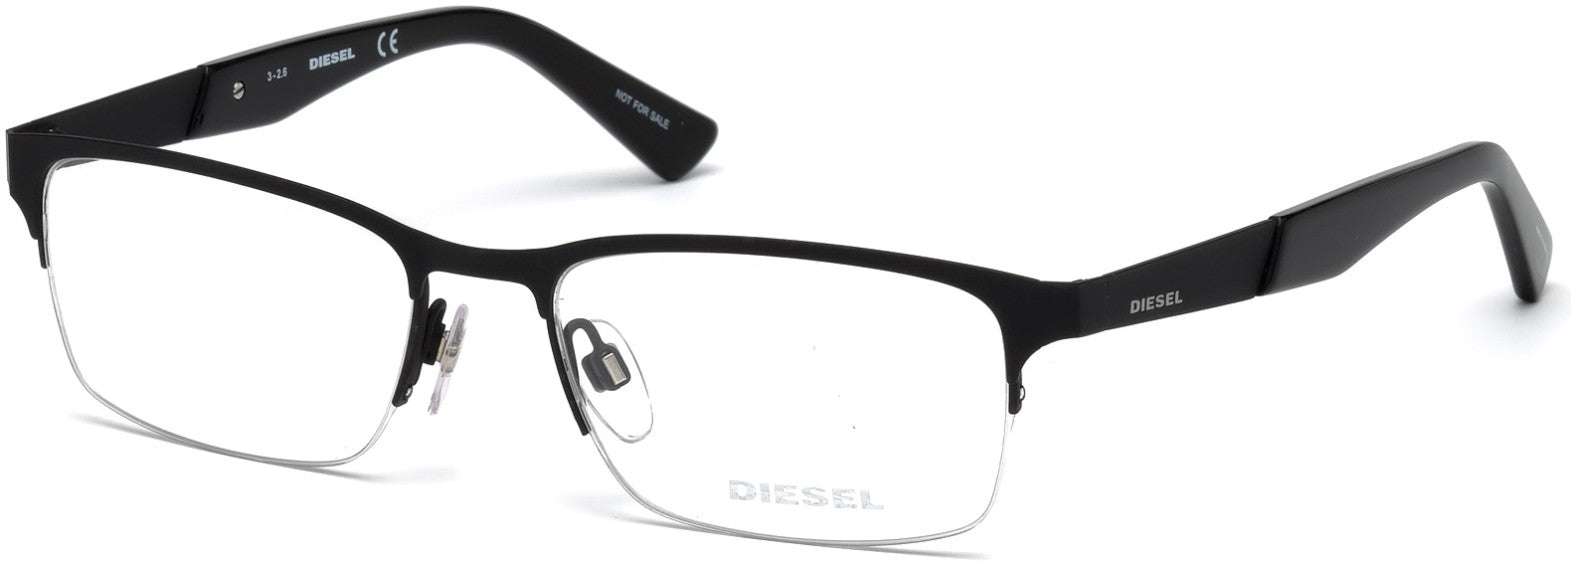 Diesel DL5235 Rectangular Eyeglasses 002-002 - Matte Black